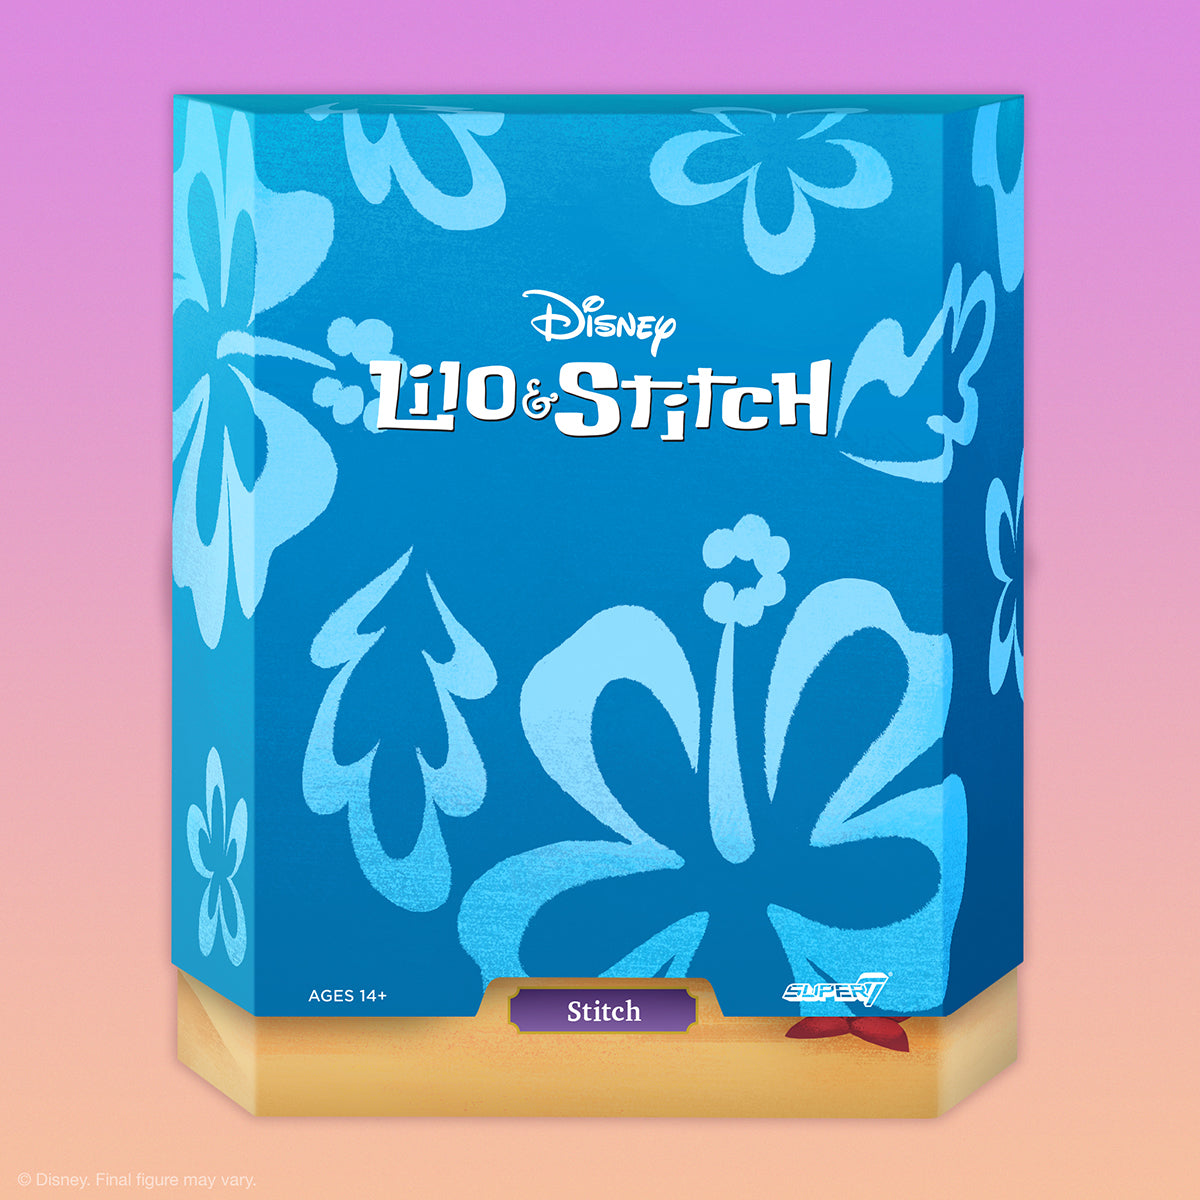 Super7 - Ultimates - Lilo & Stitch Disney - Stitch